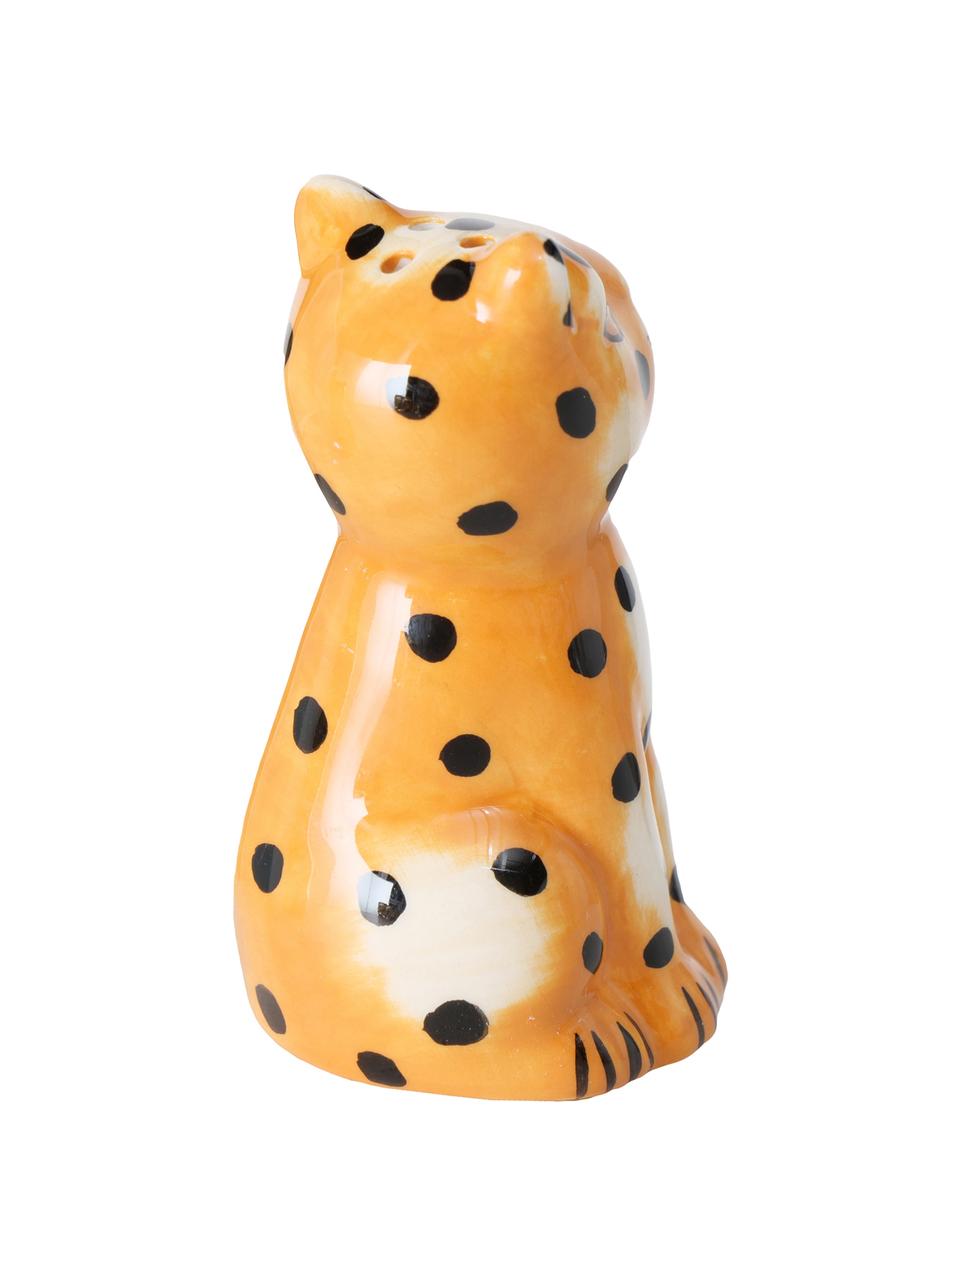 Solnička a pepřenka Gepard, 2 díly, Oranžová, bílá, černá